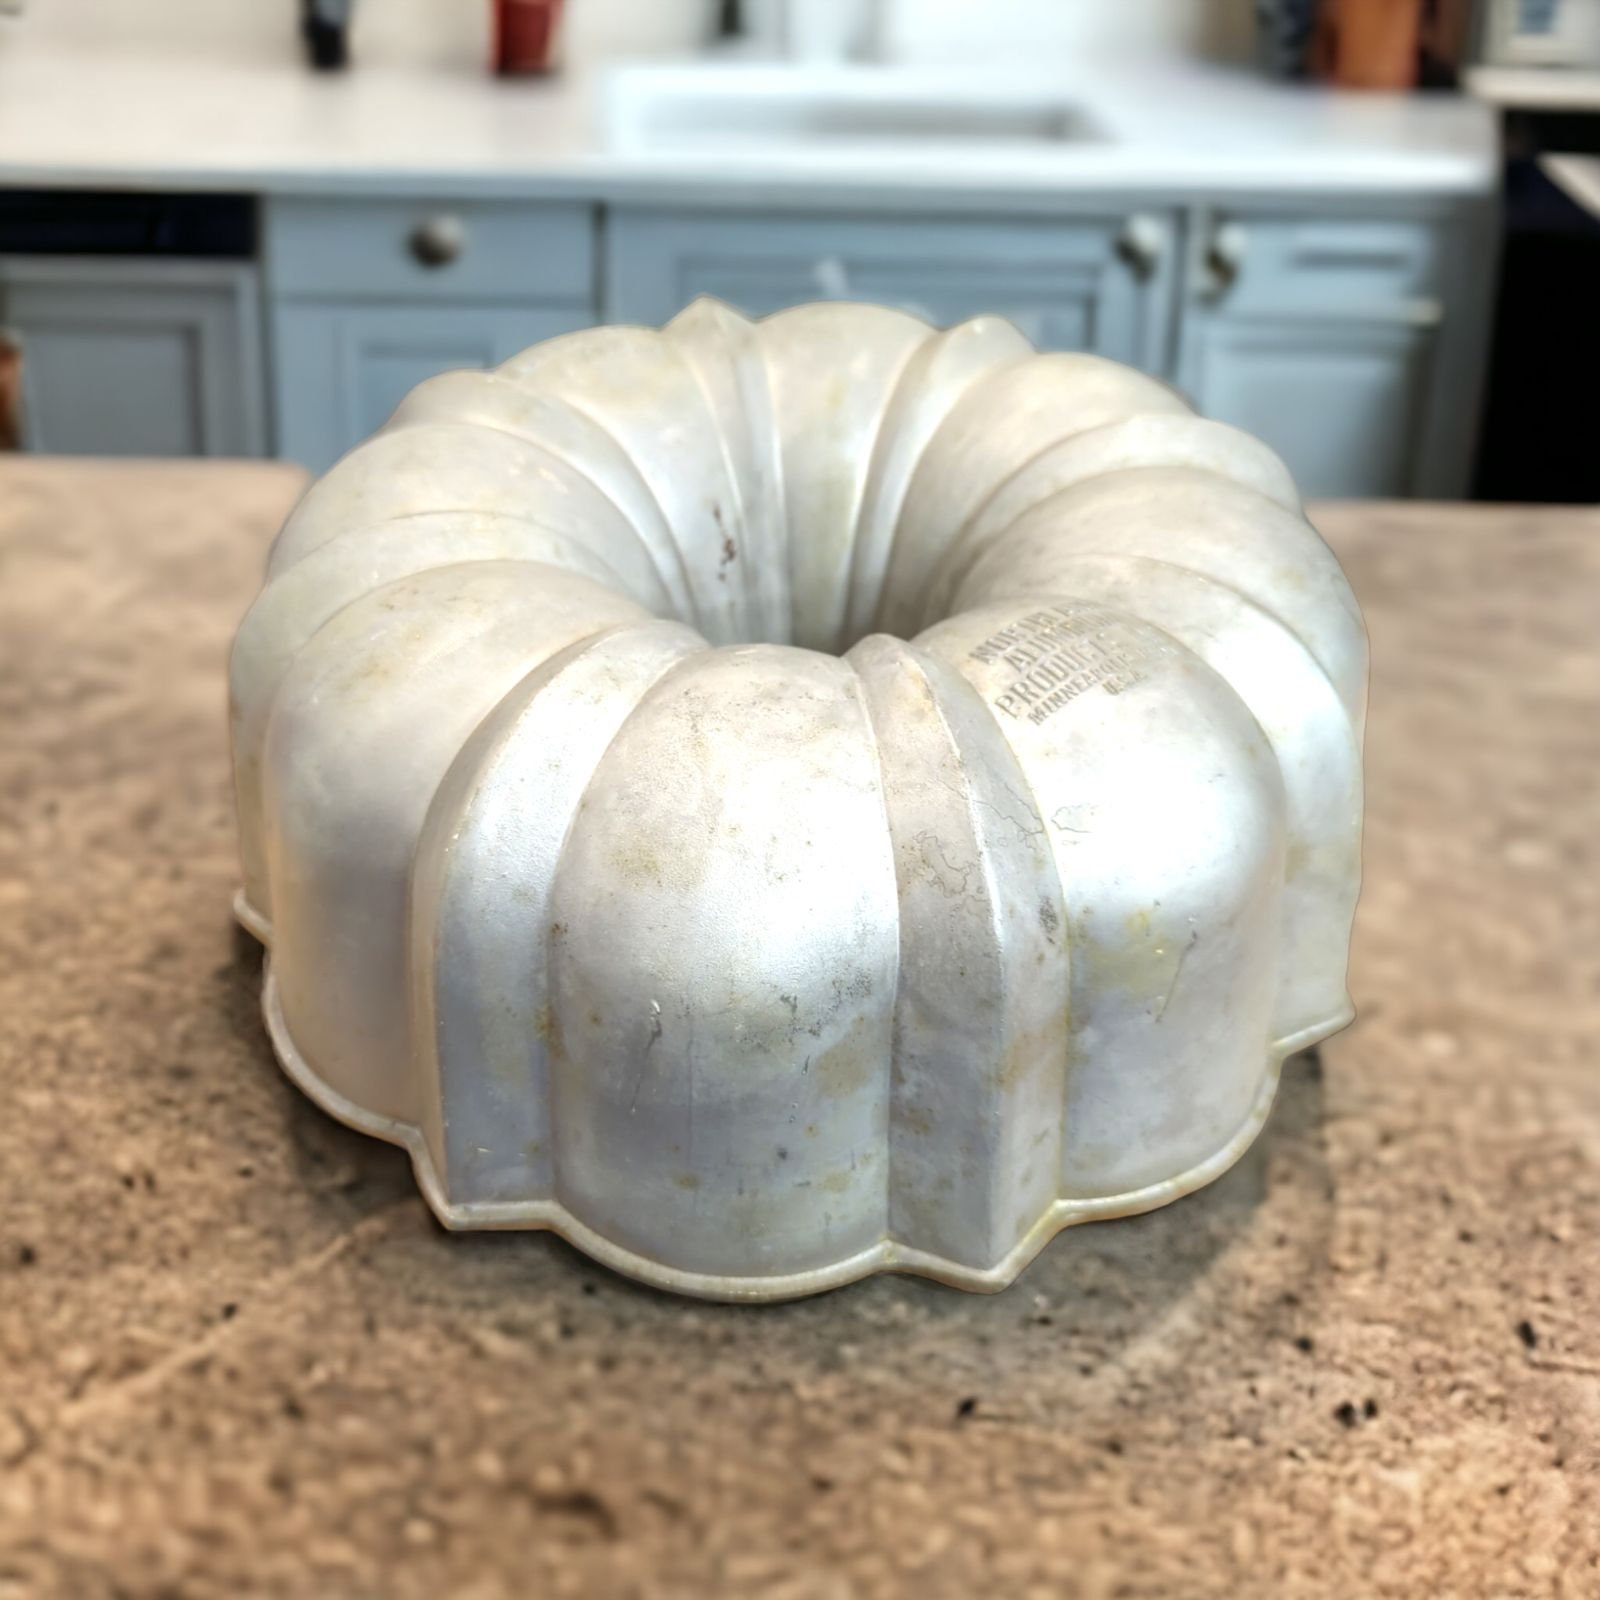 Nordic Ware Turkey Cake cakecast aluminum pan/mold kitchen collectible